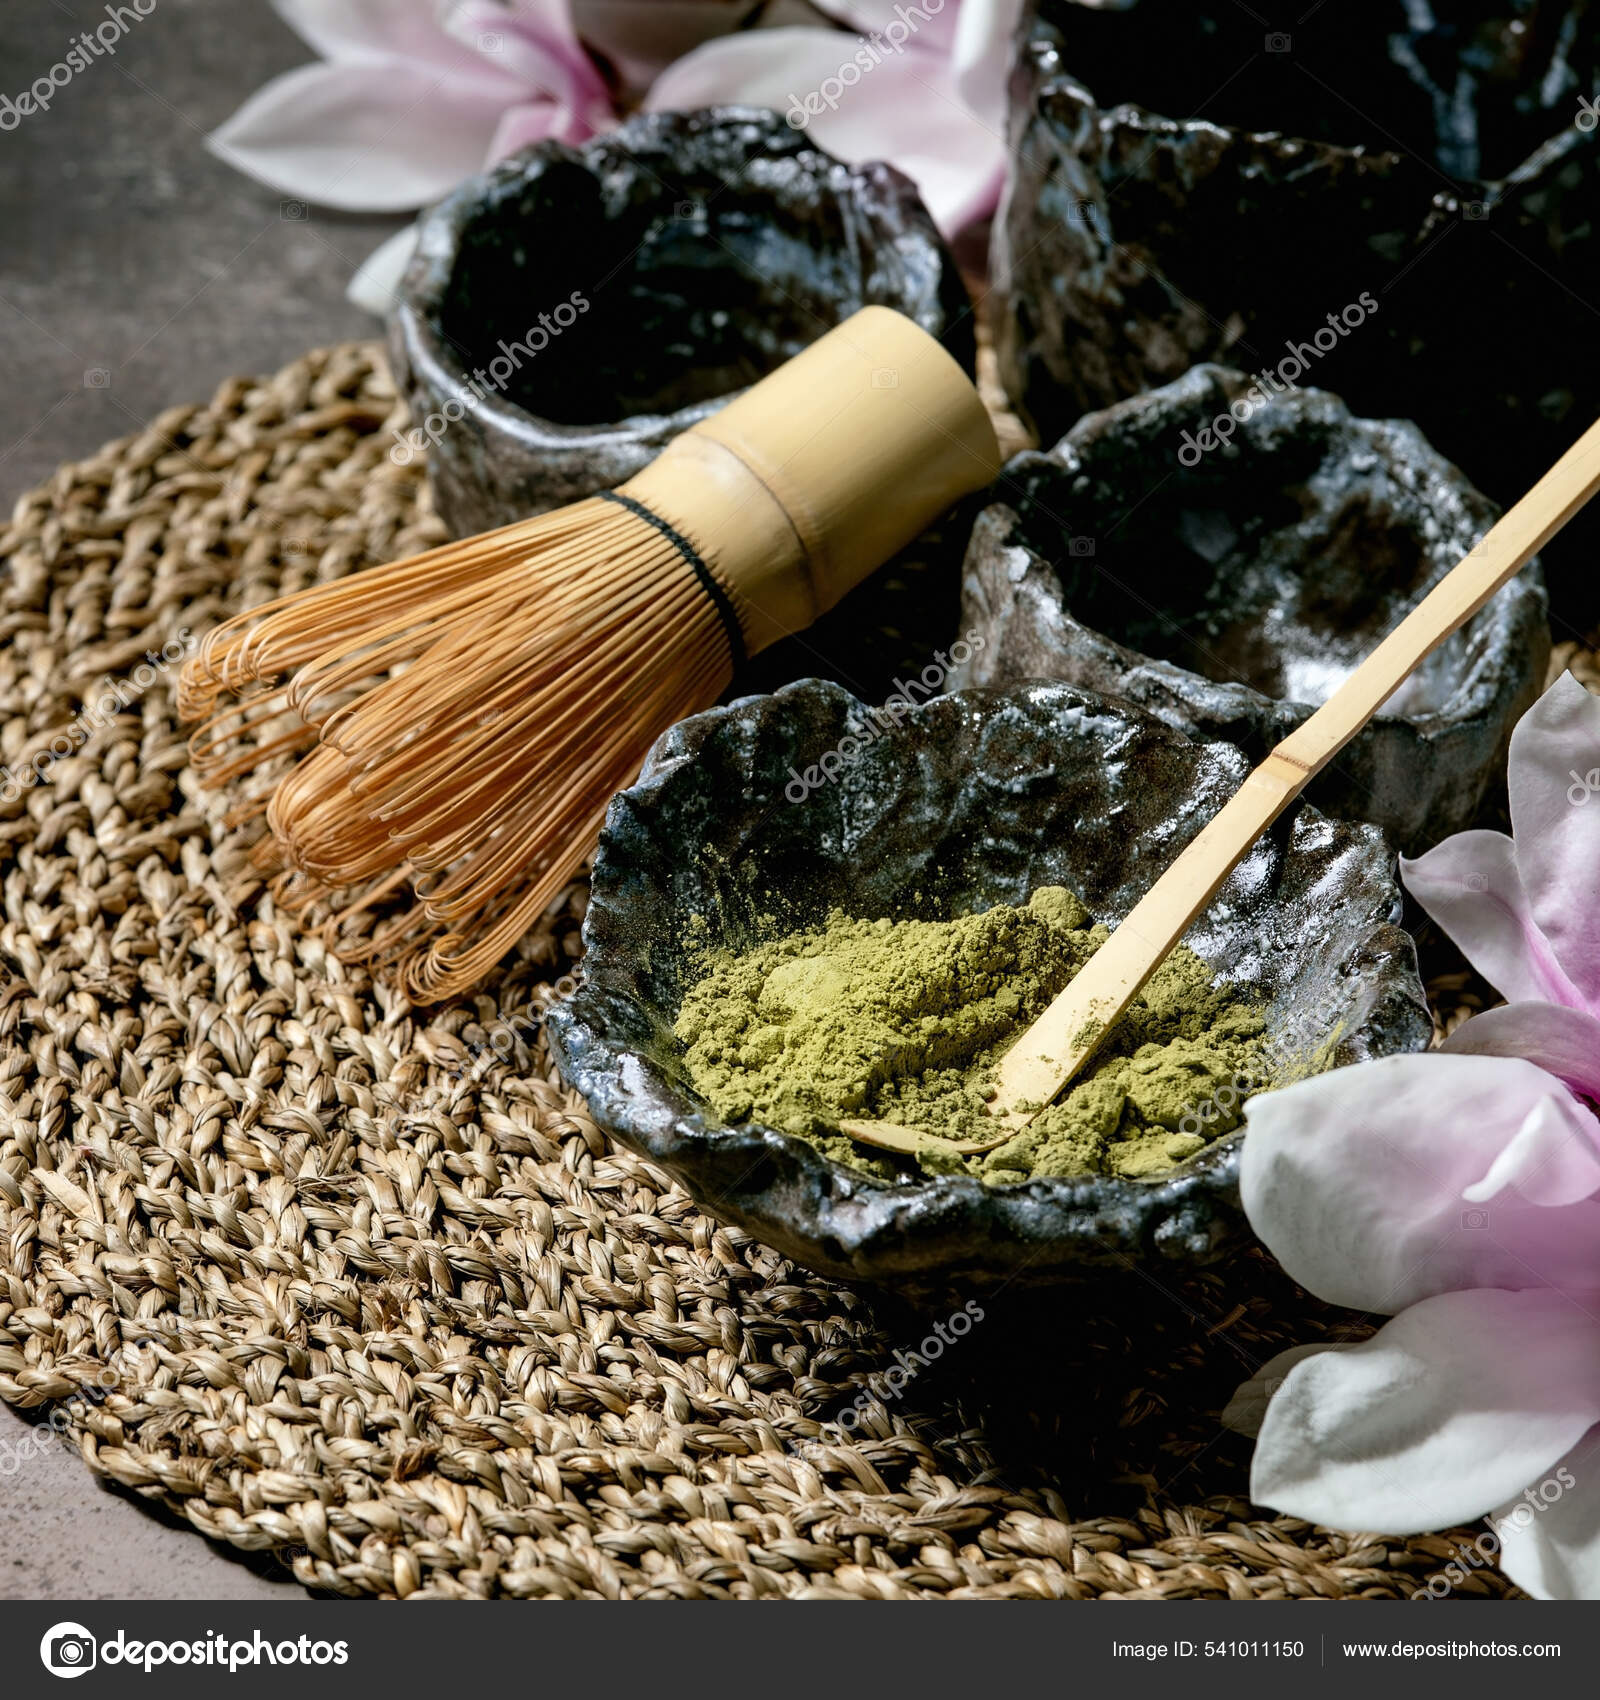 https://st.depositphotos.com/2036925/54101/i/1600/depositphotos_541011150-stock-photo-japanese-matcha-green-tea-powder.jpg